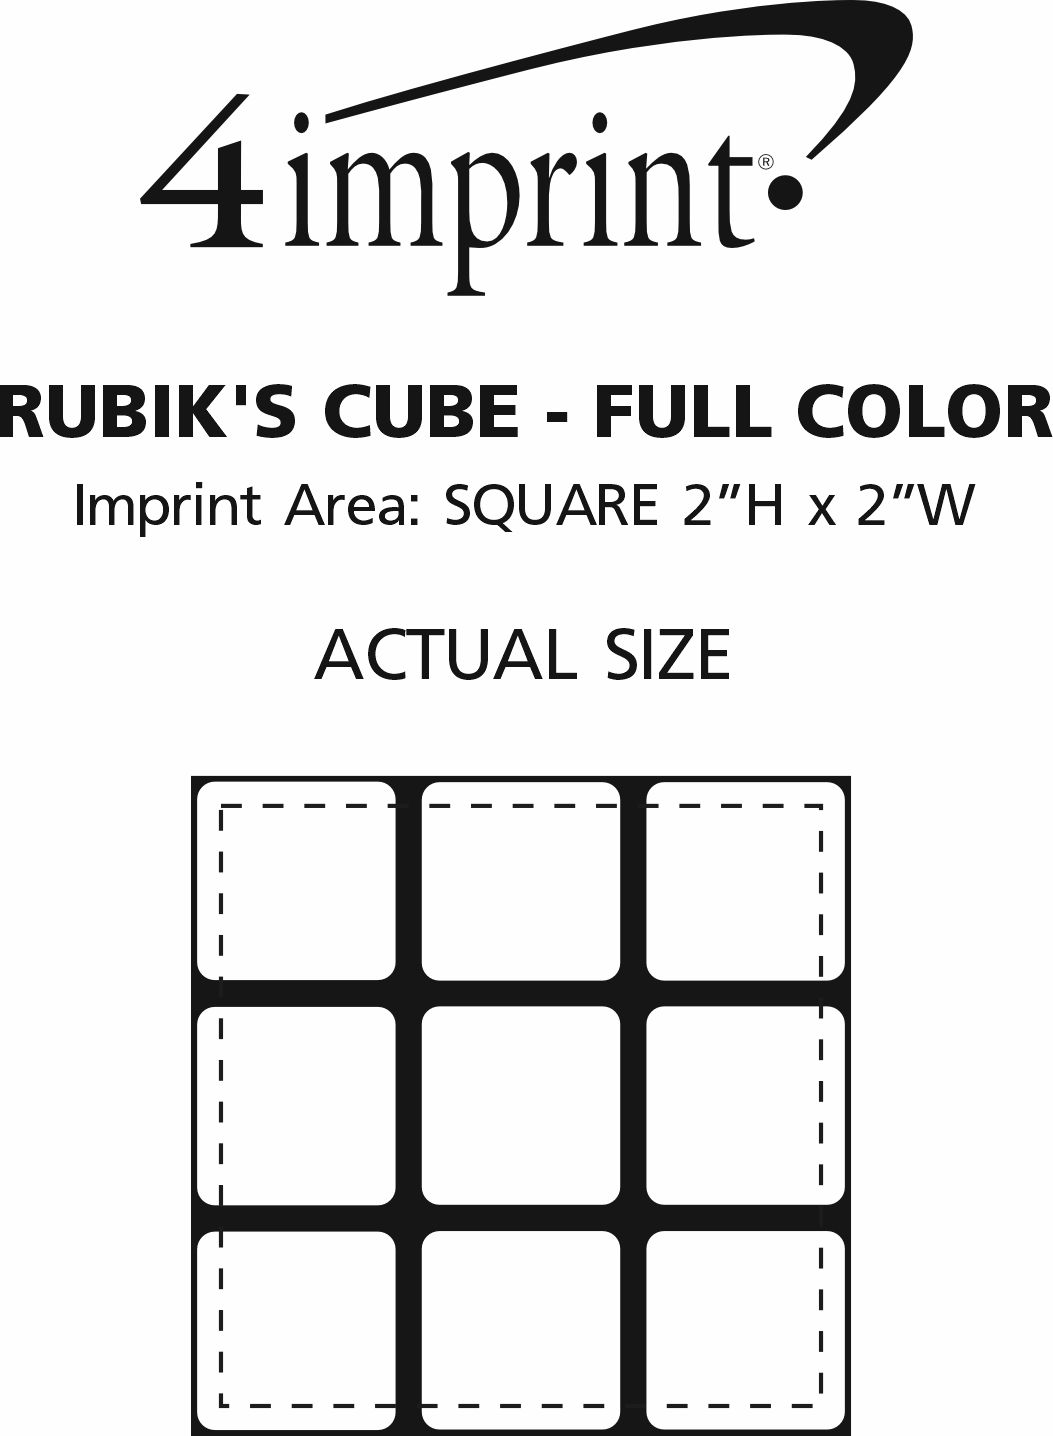 Imprint Area of Rubik's Cube - Full Color